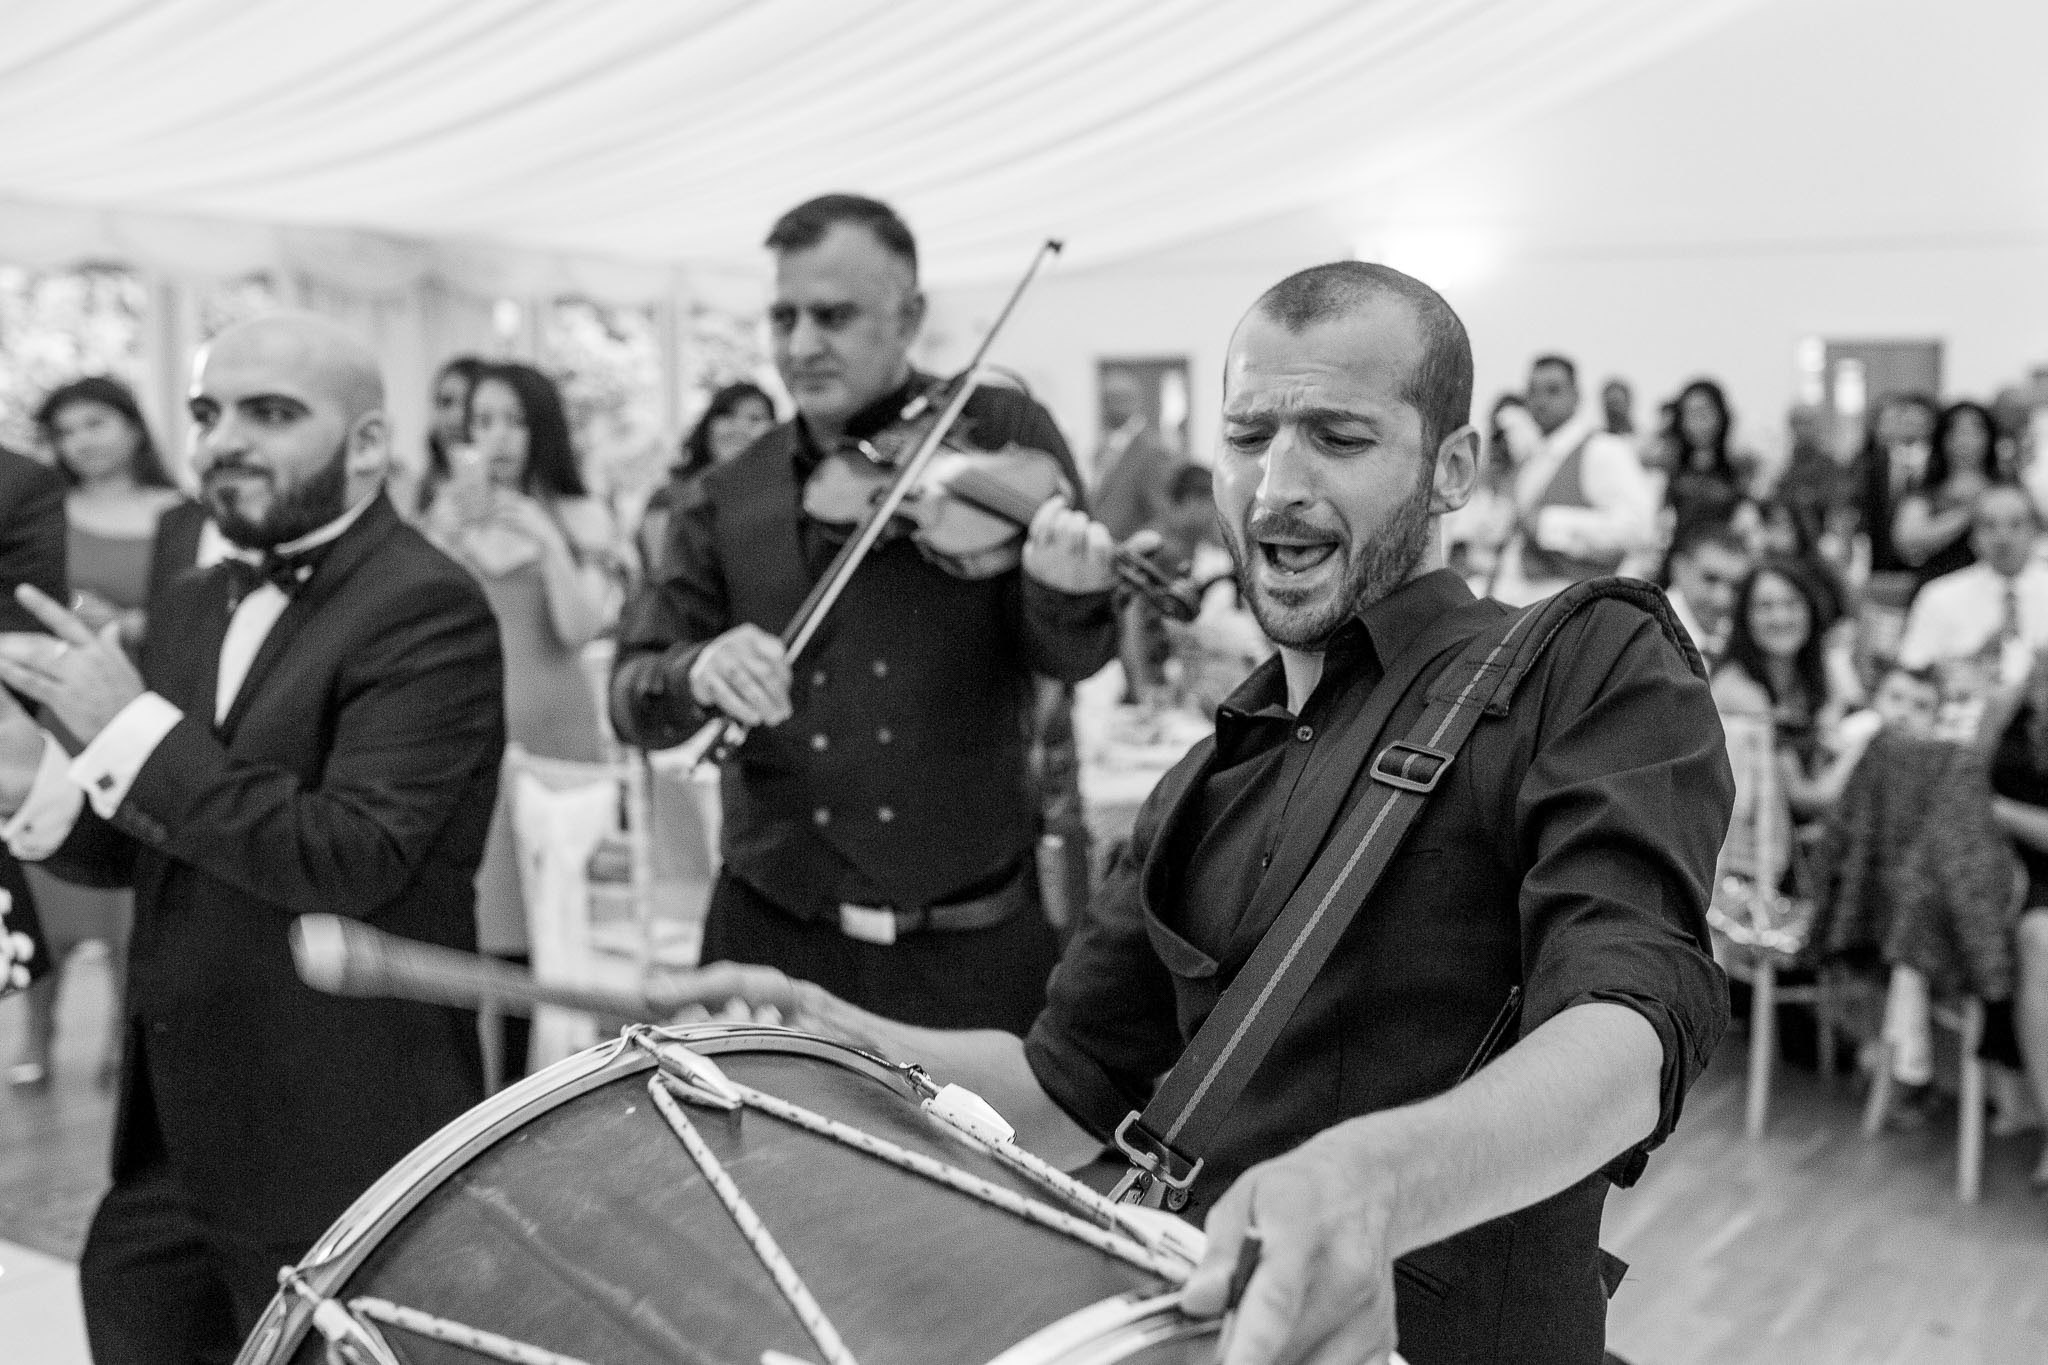 Turkish, Cypriot and Greek wedding music